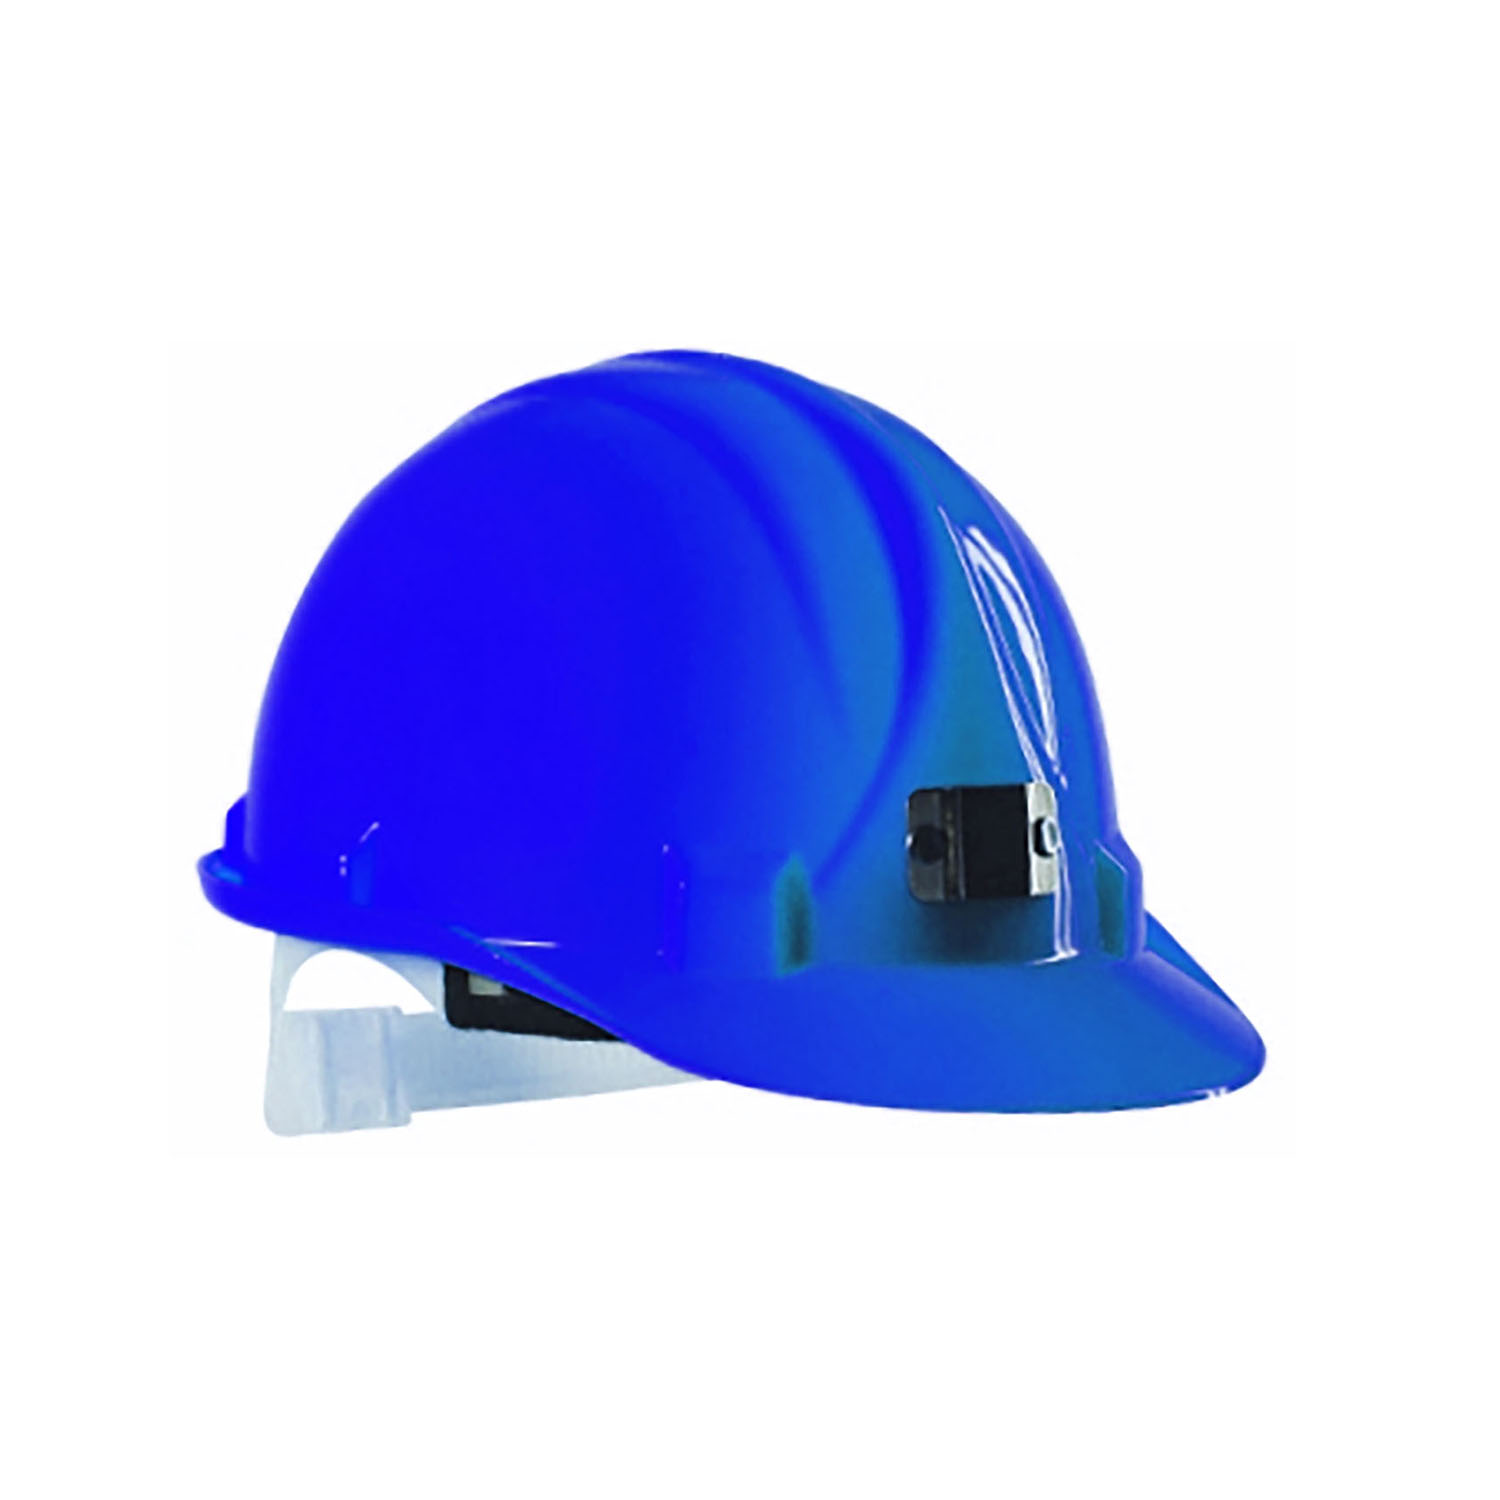 Miner’s Safety Helmet